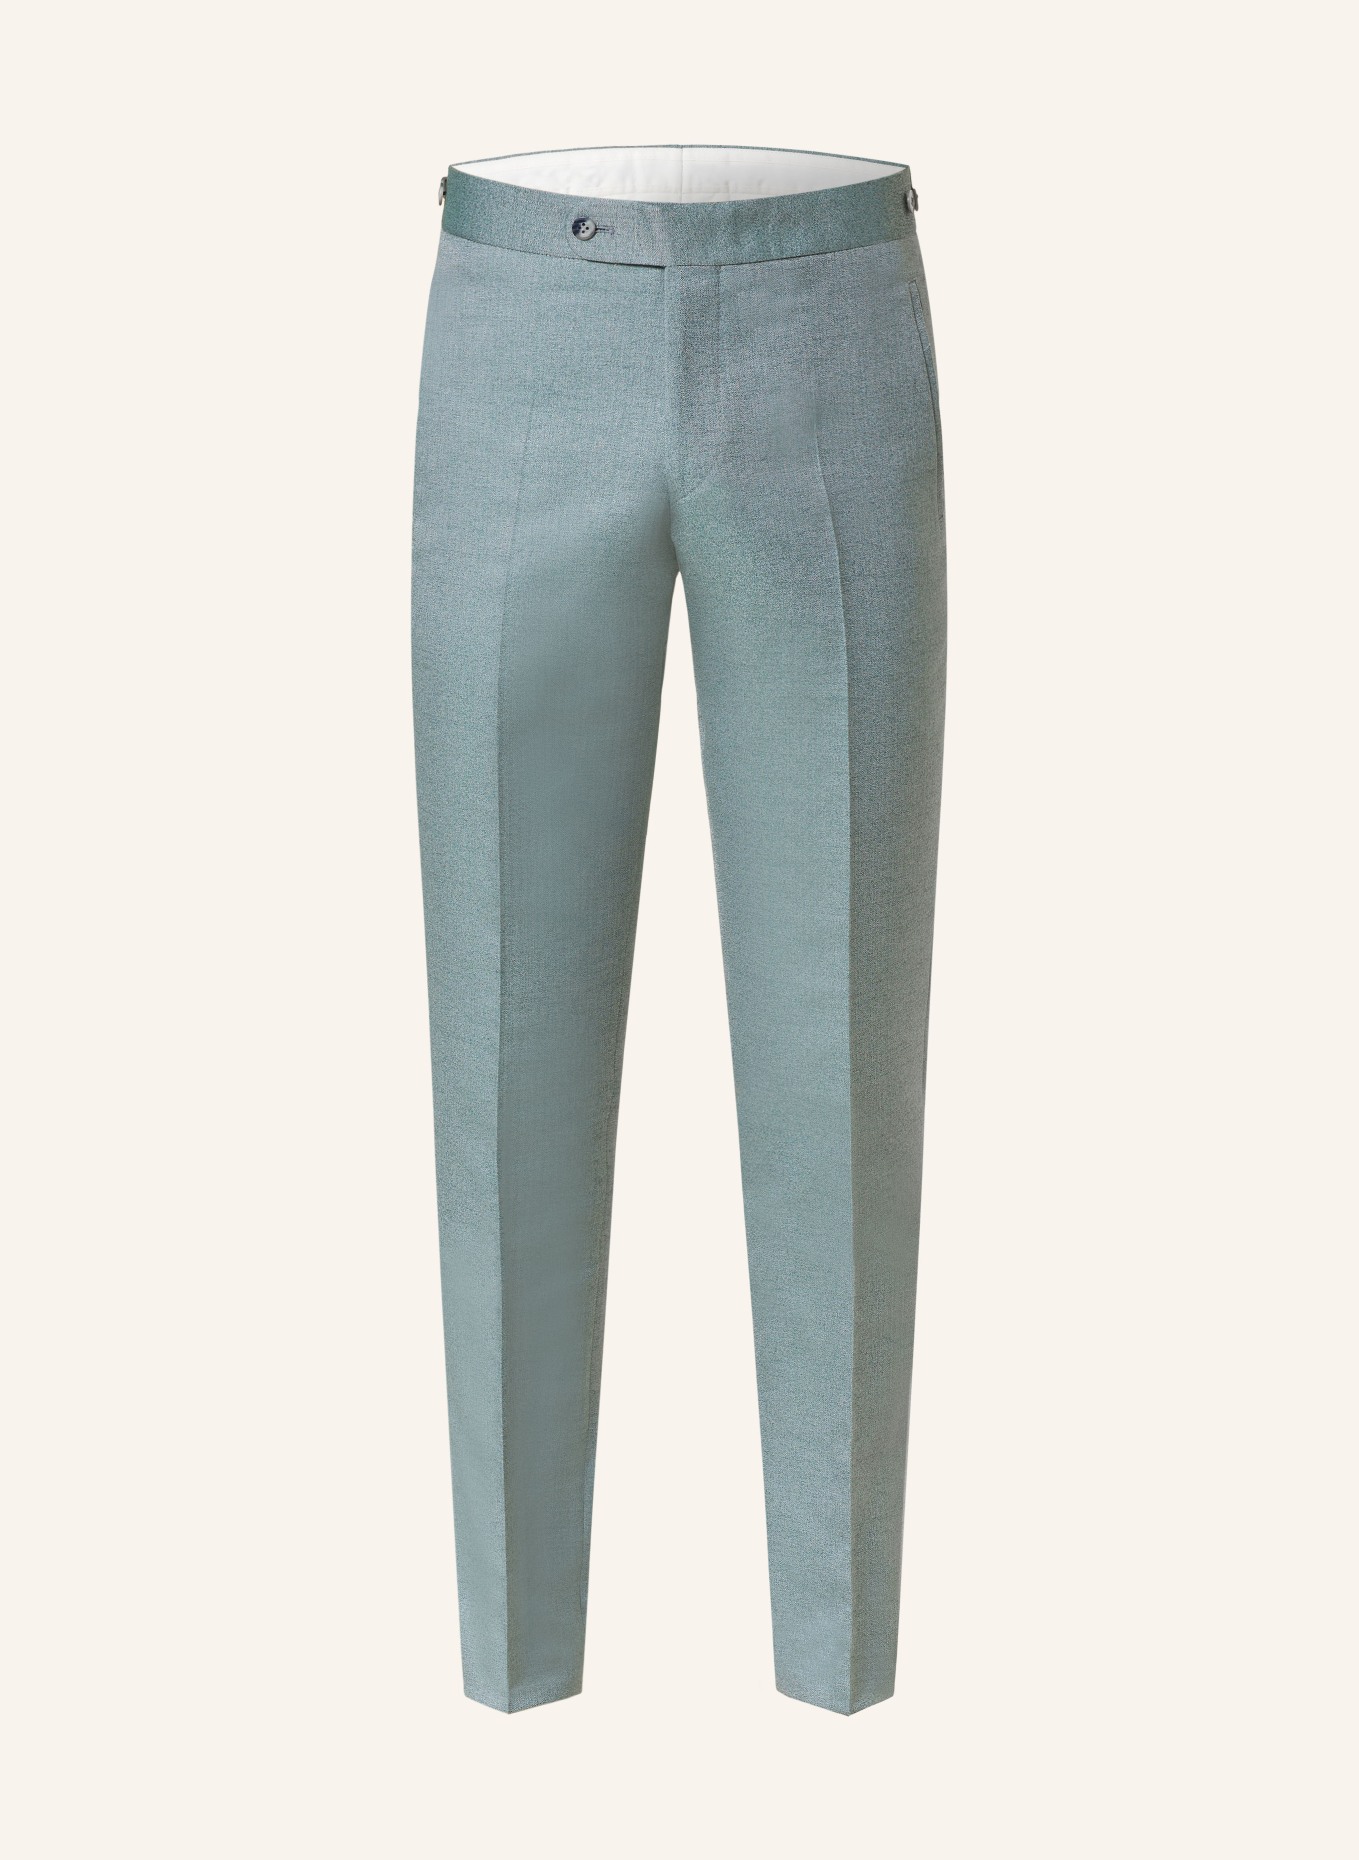 WILVORST Anzughose Extra Slim Fit, Farbe: 045 grün (Bild 1)